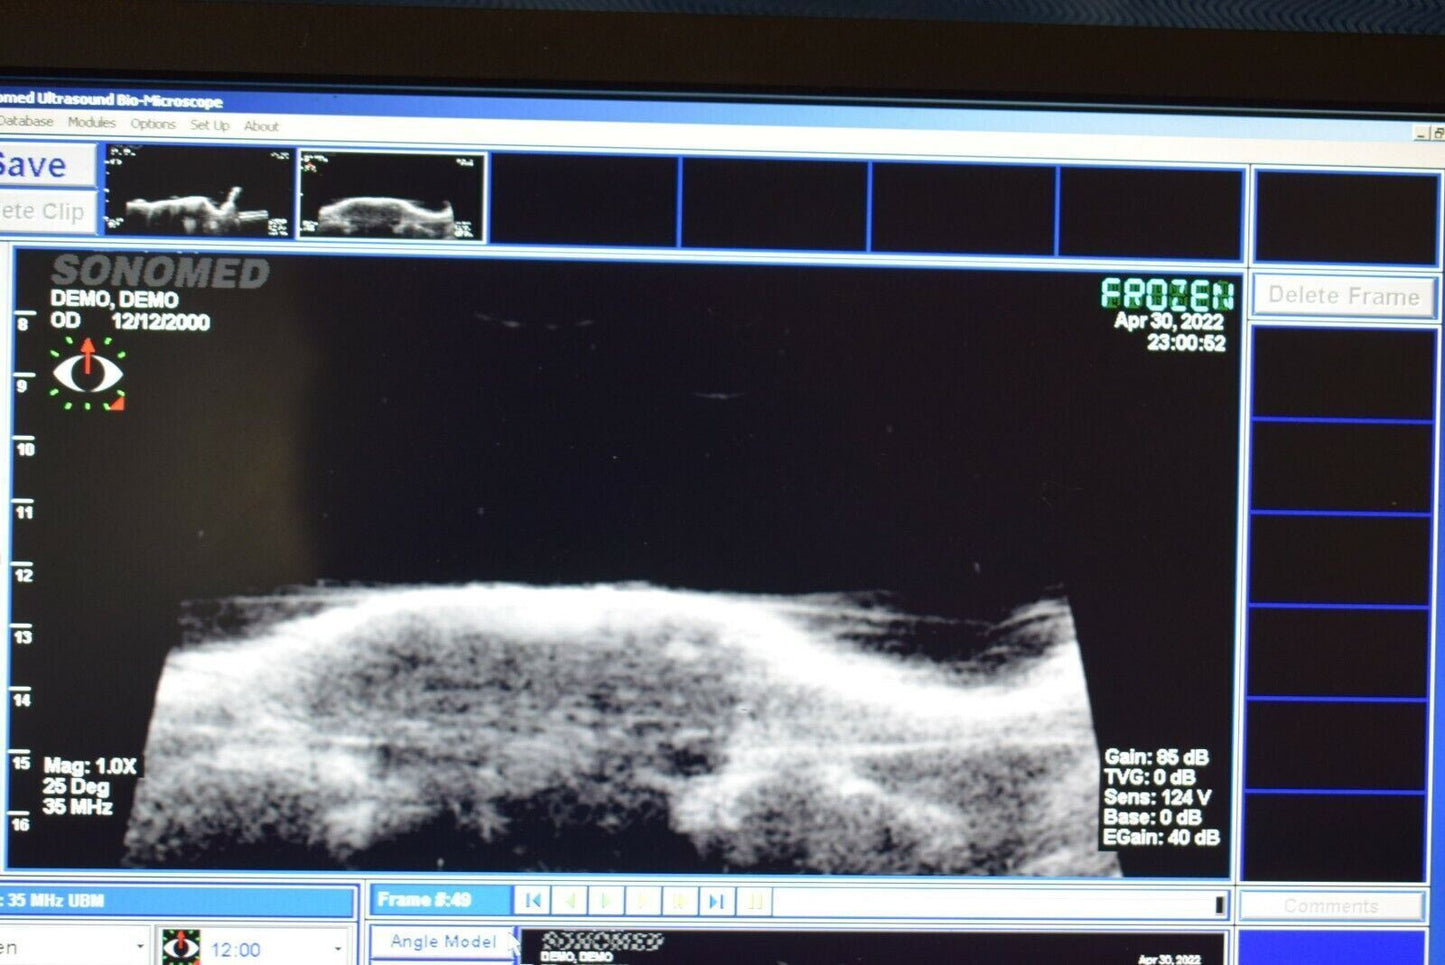 Sonomed Vumax II UBM Ophthalmic Ultrasound Biomicroscopy Glaucoma